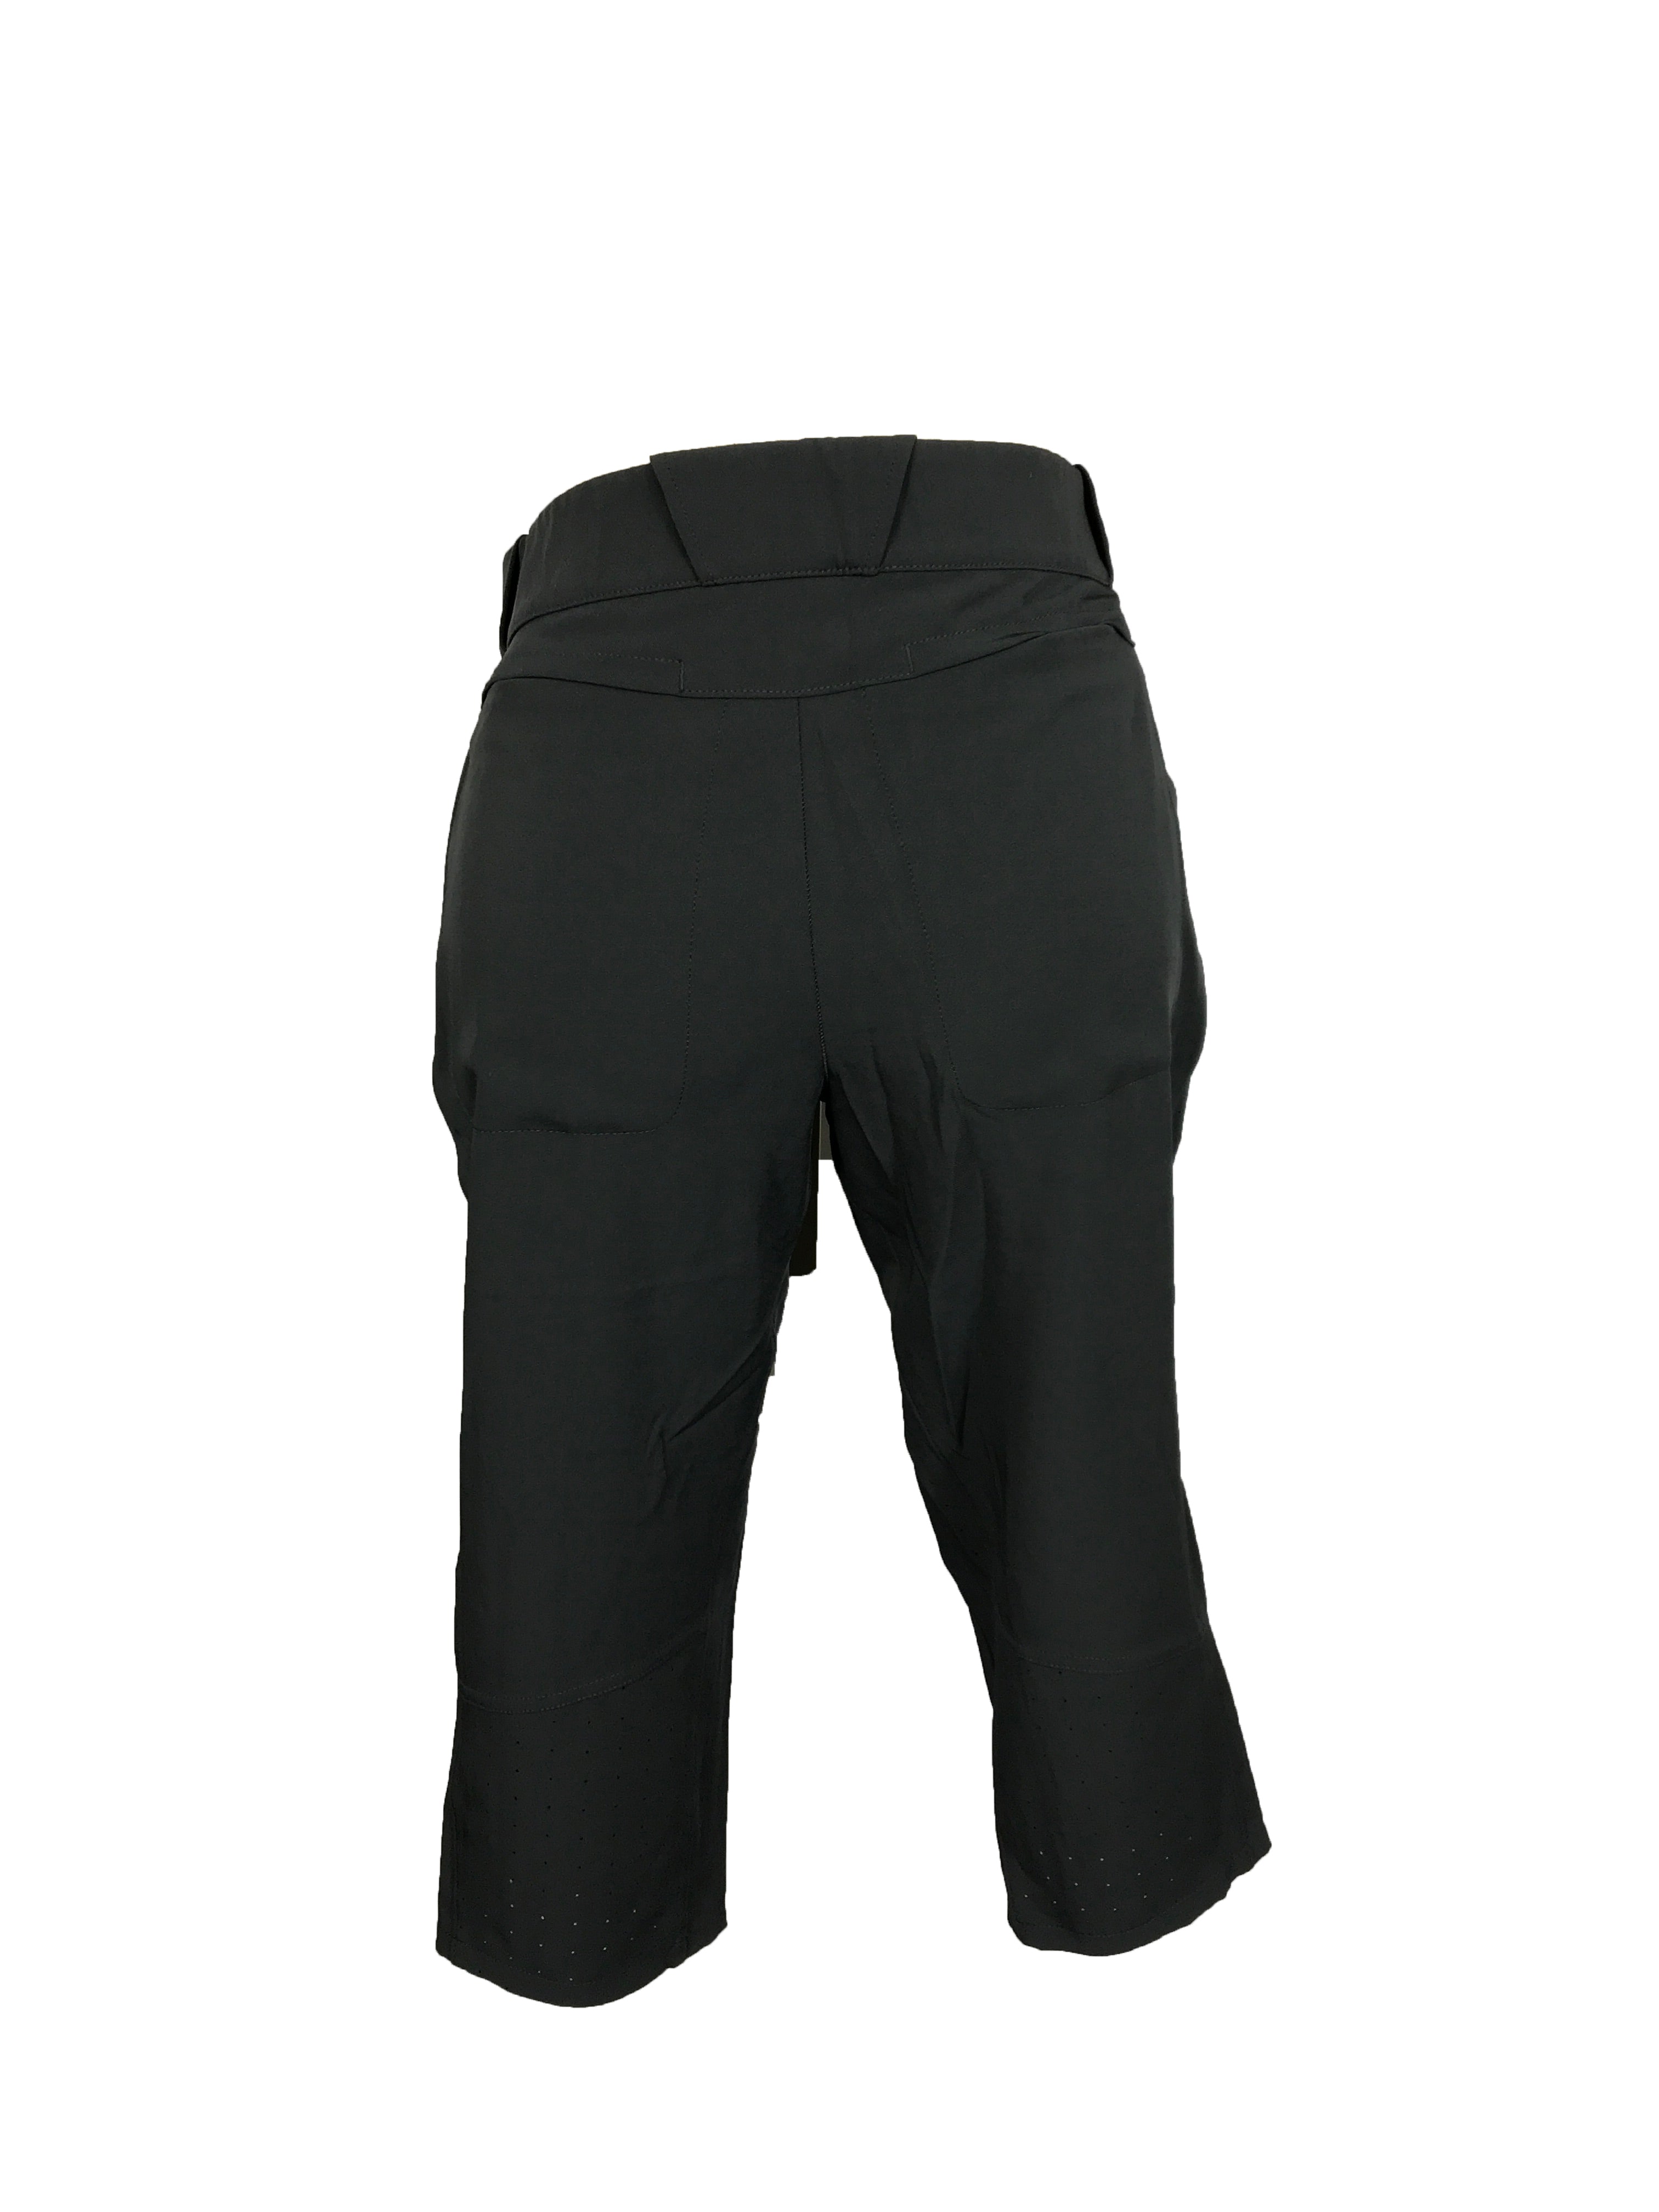 Nike x Michigan State Grey Softball Capri Pants Women's Size XL L+2